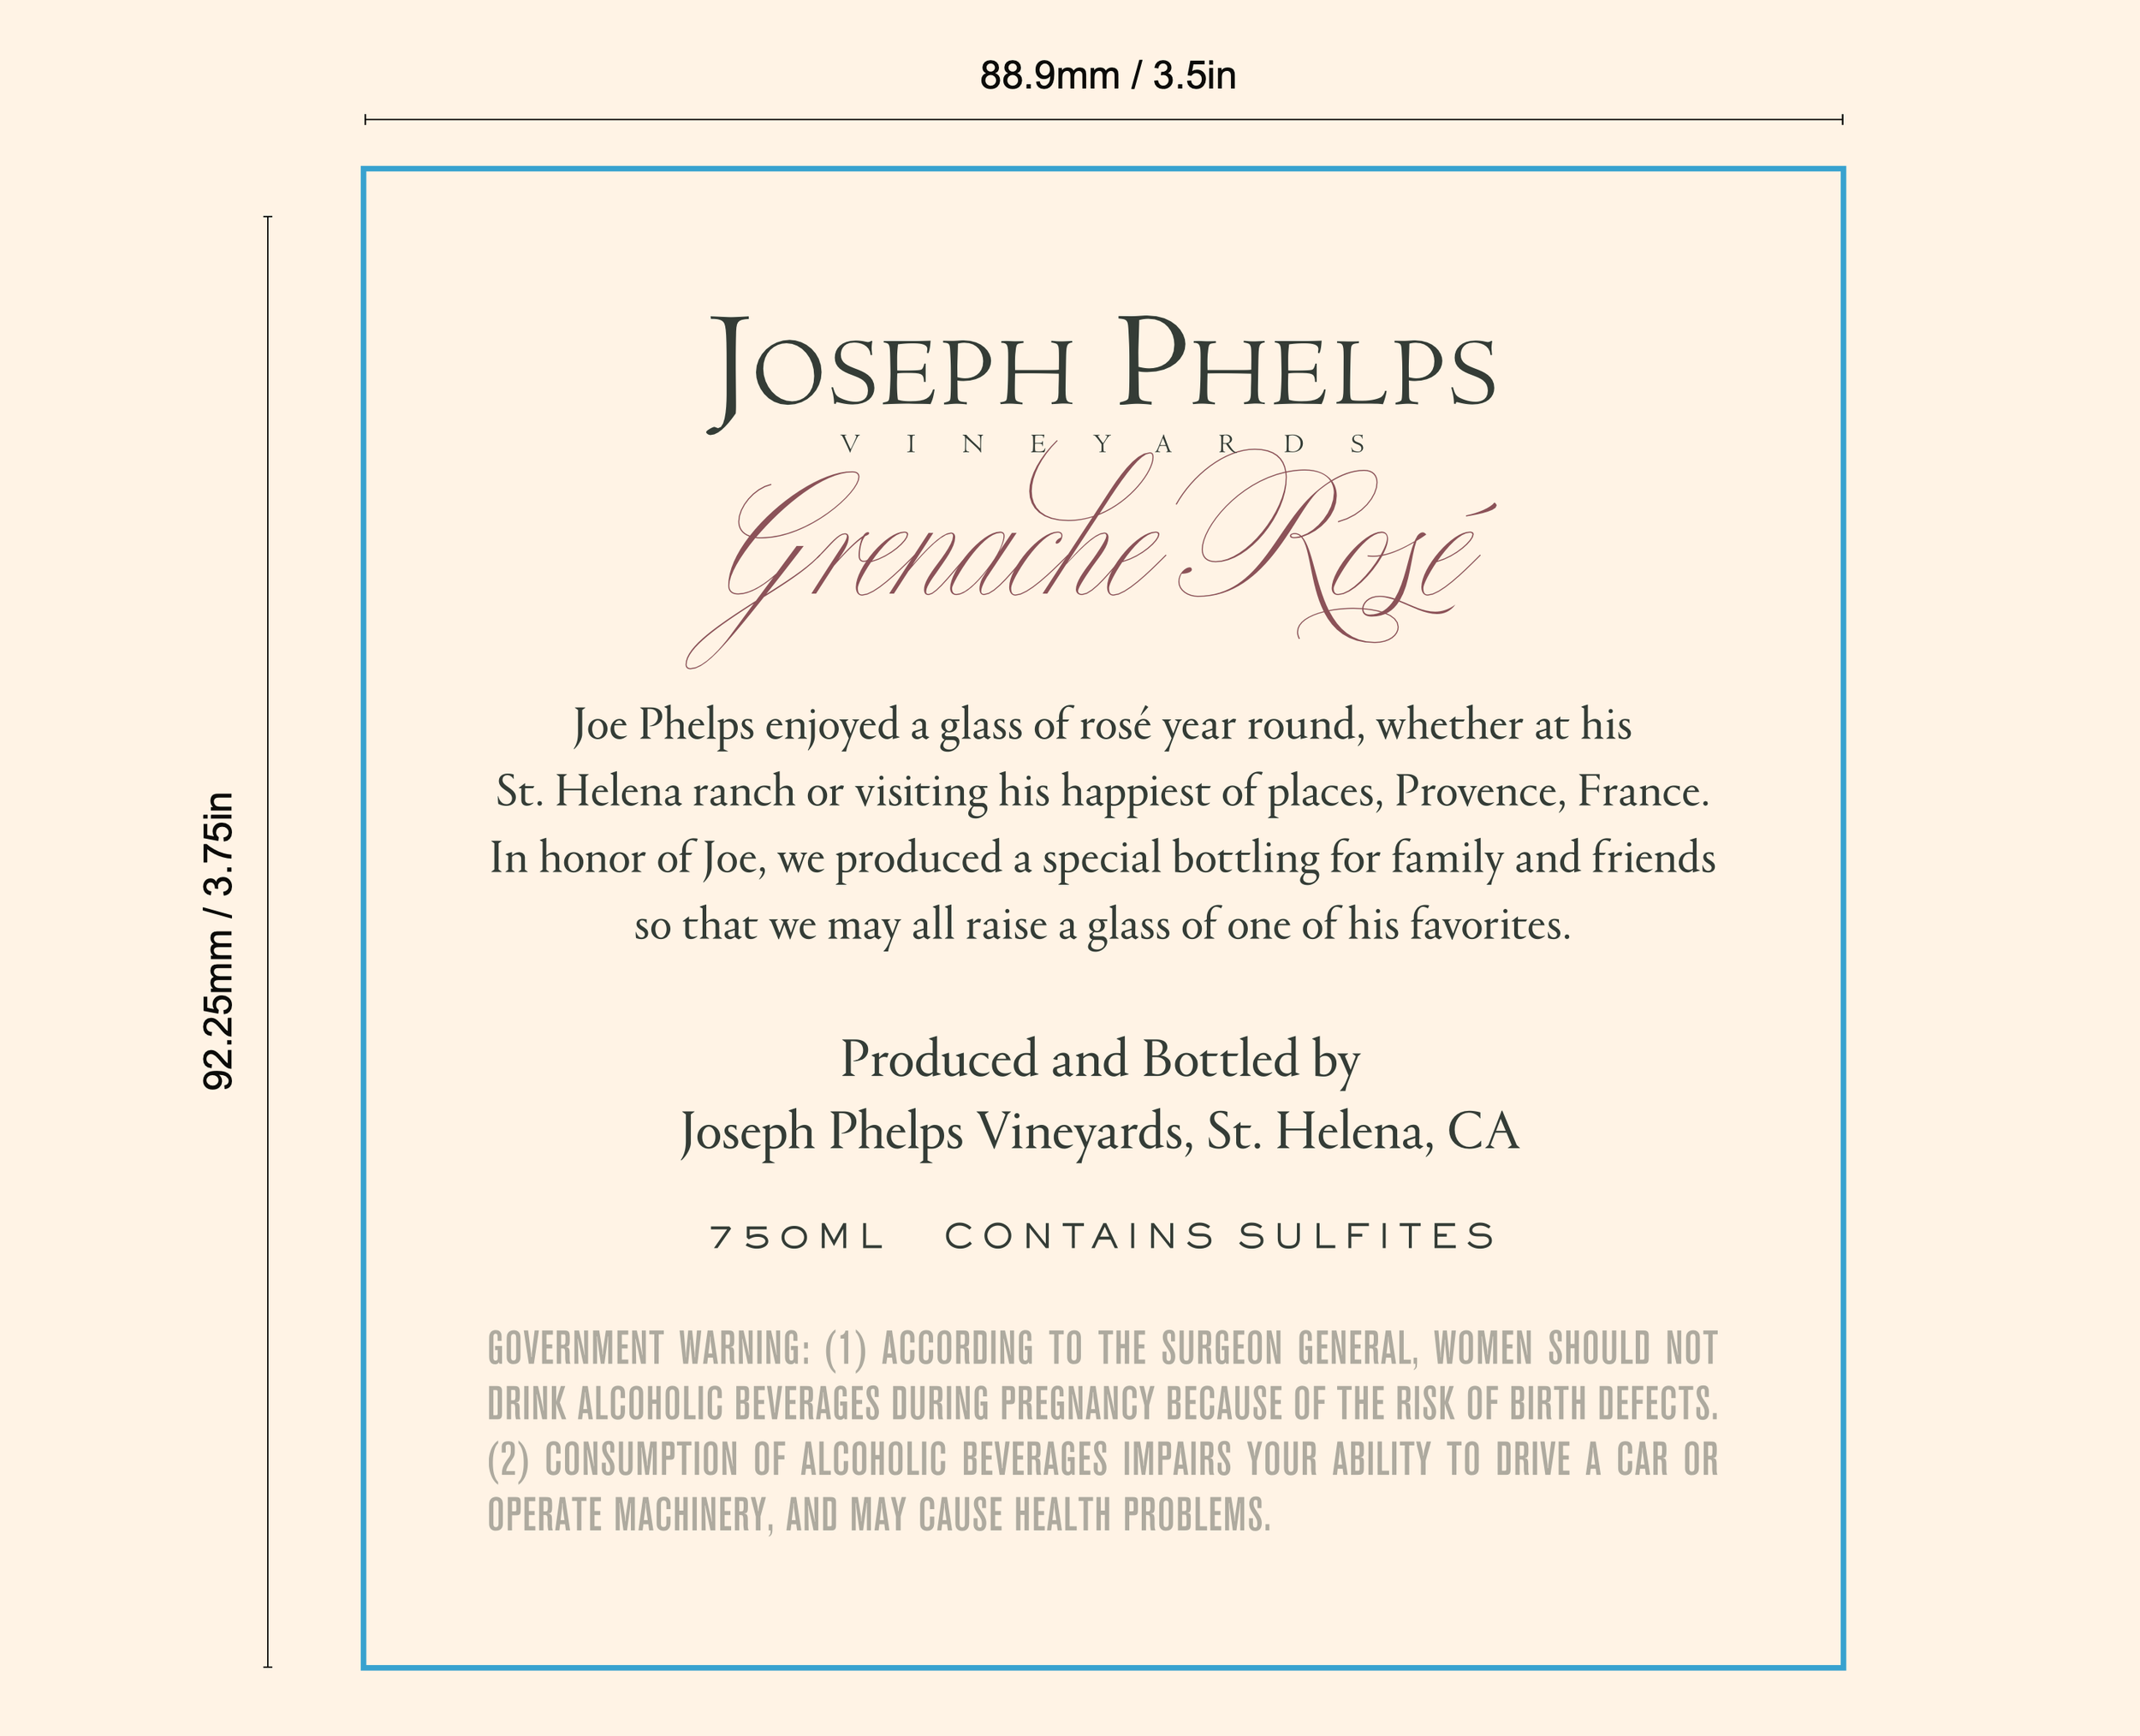 Joseph Phelps Label Design and Copywriting